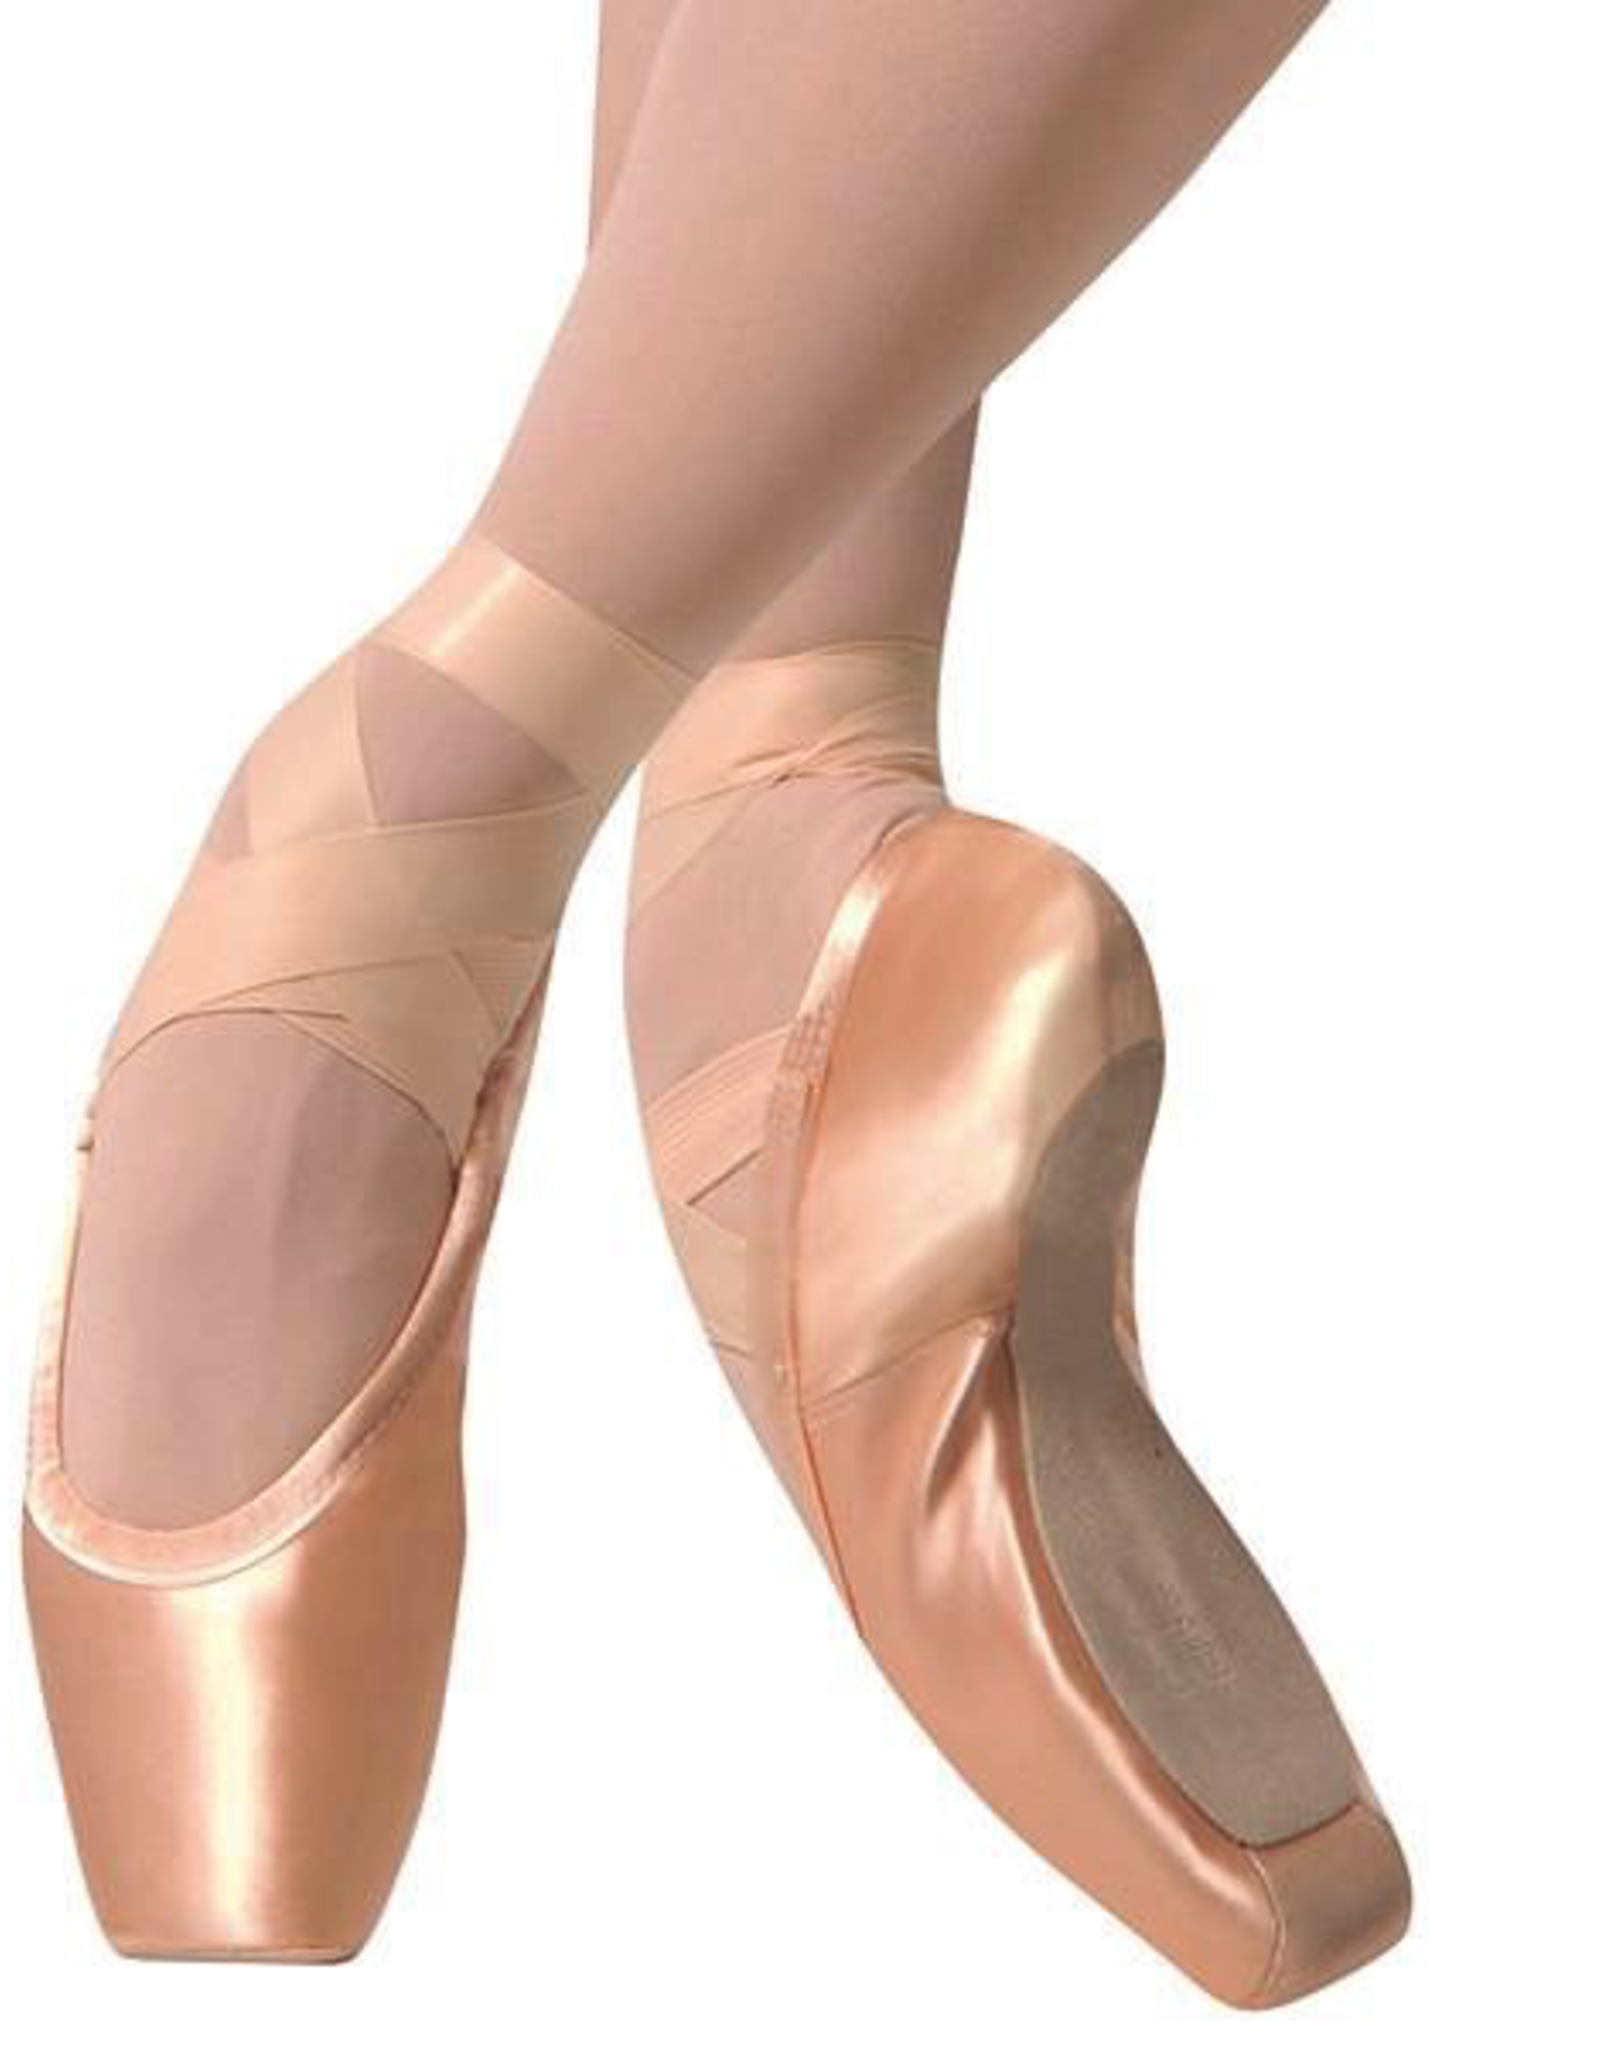 GAYNOR MINDEN Convertible Light Pink Dance Ballet TIGHTS Size